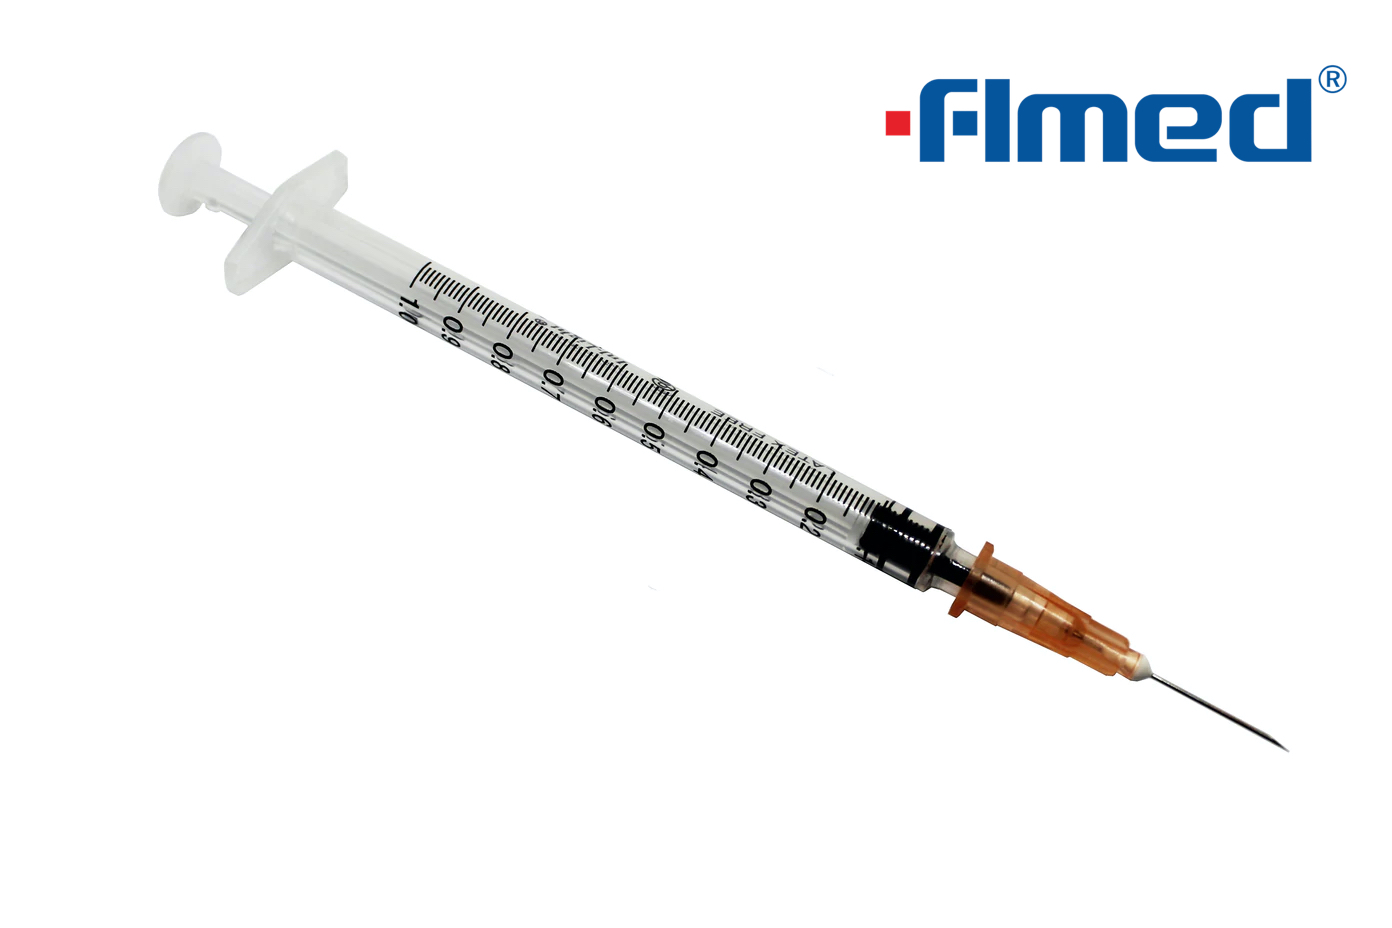 2.5ml Syringe With Needle-25g 1 Inch Needle, Disposable Individual